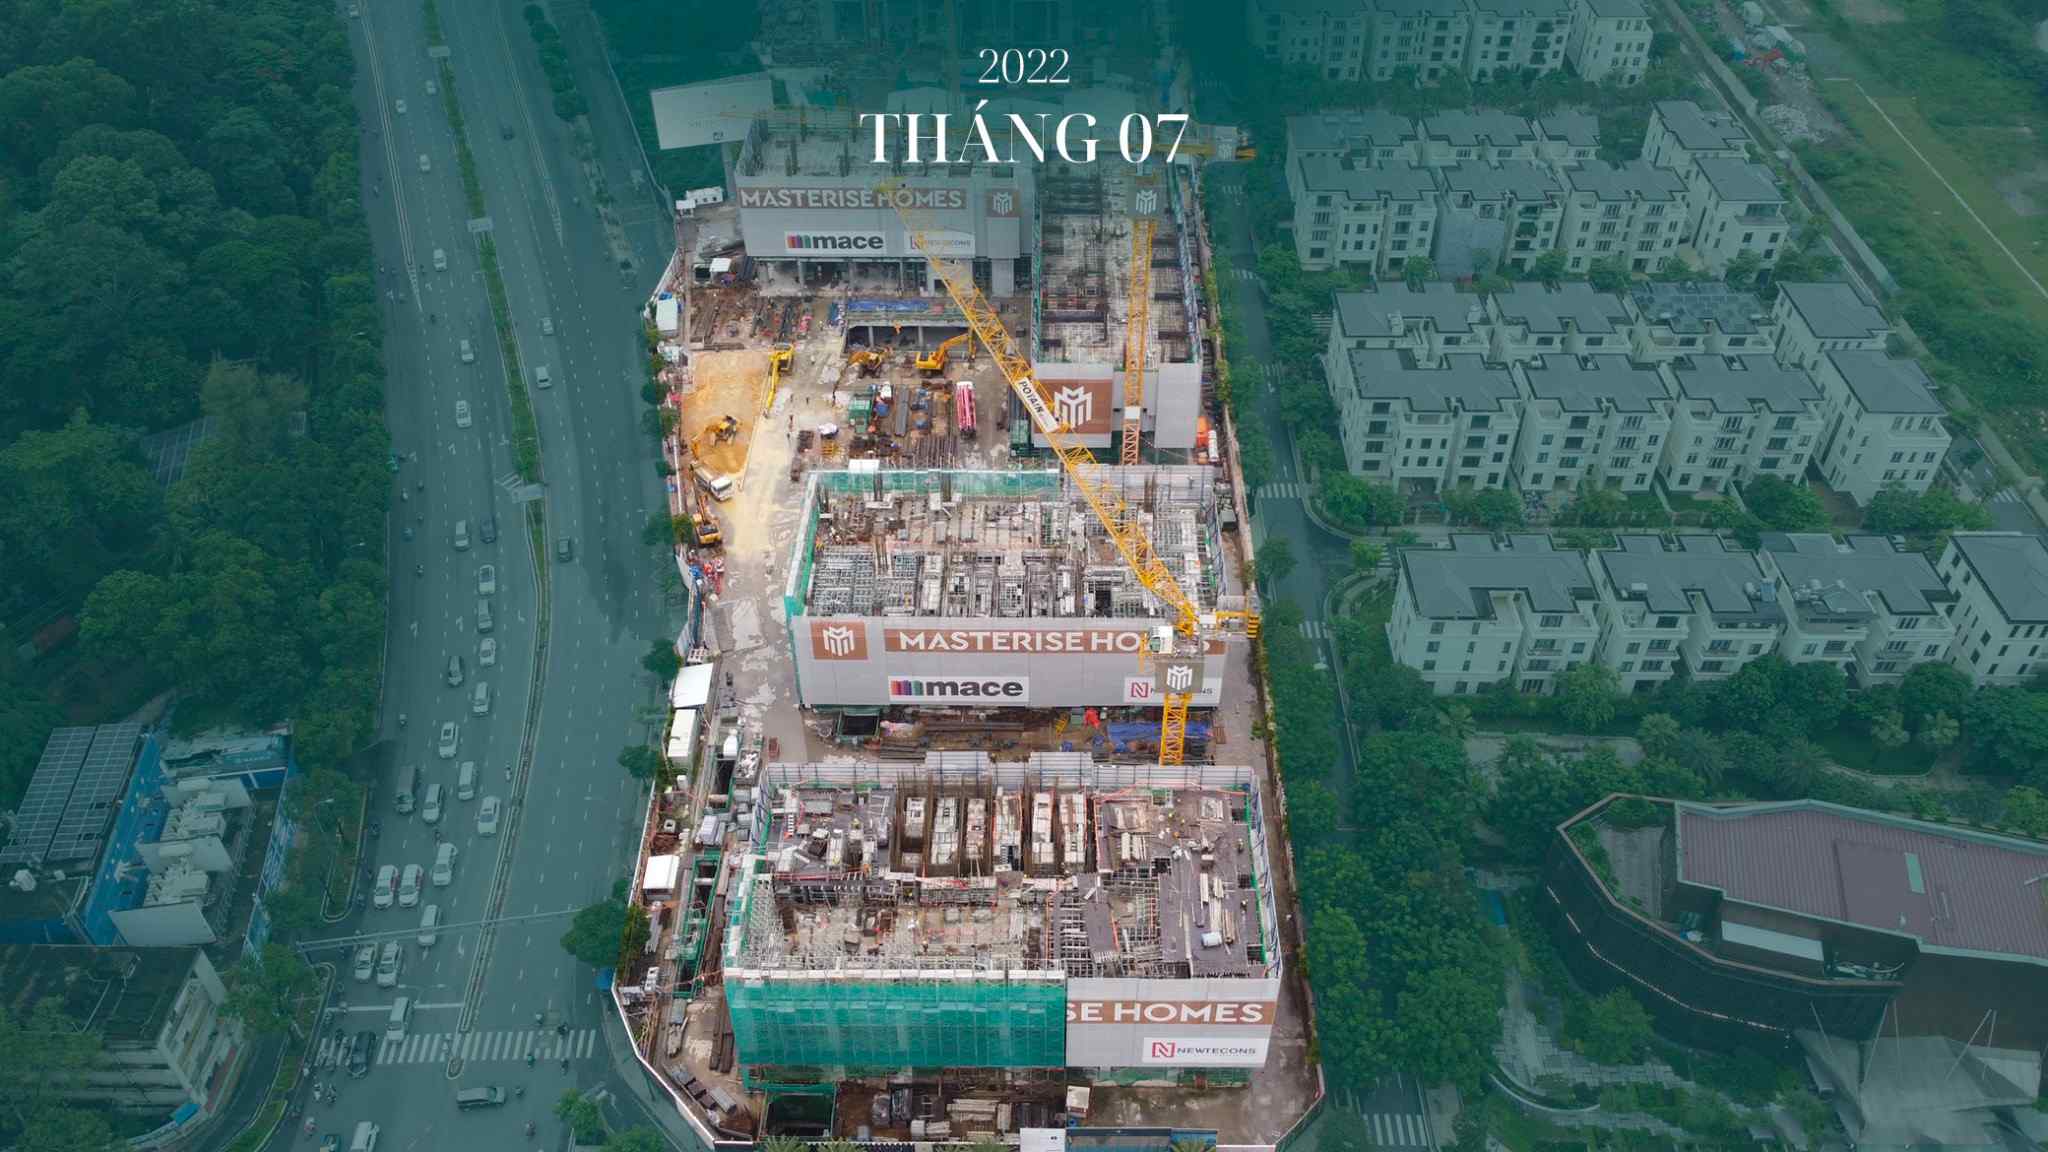 Progress of Grand Marina Saigon luxury apartment project in August, 2022